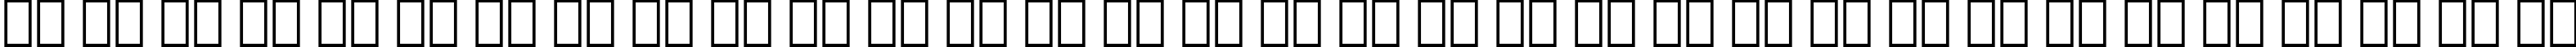 Пример написания русского алфавита шрифтом Serifa Thin BT